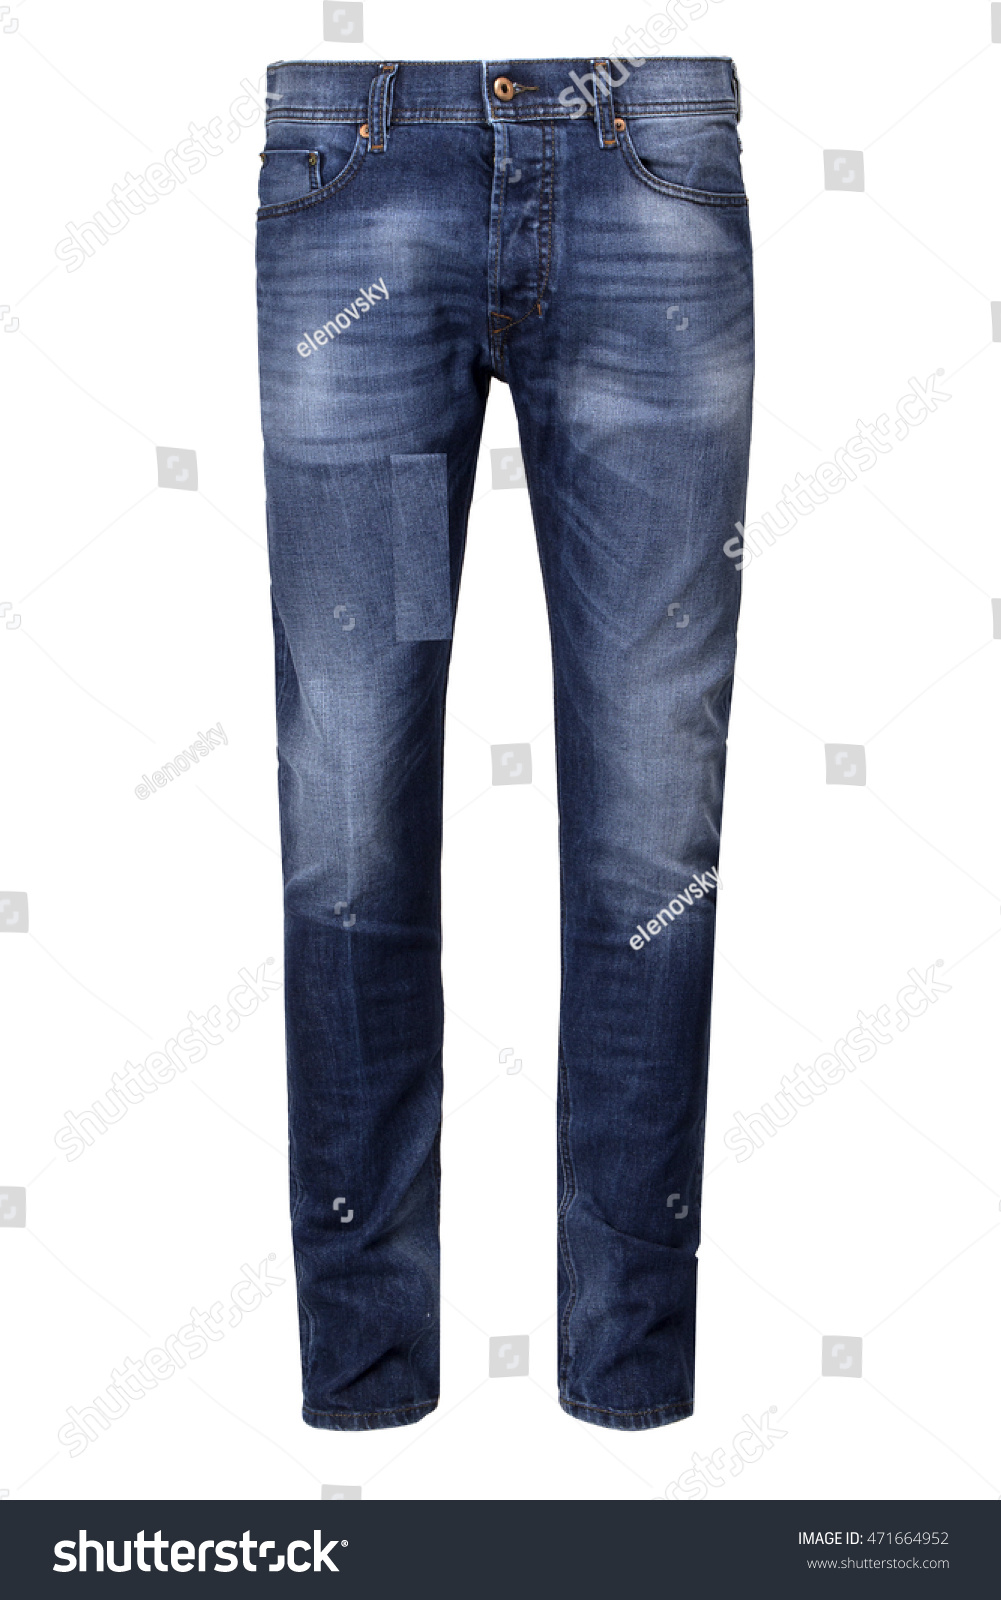 Blue Jeans Stock Photo 471664952 - Shutterstock